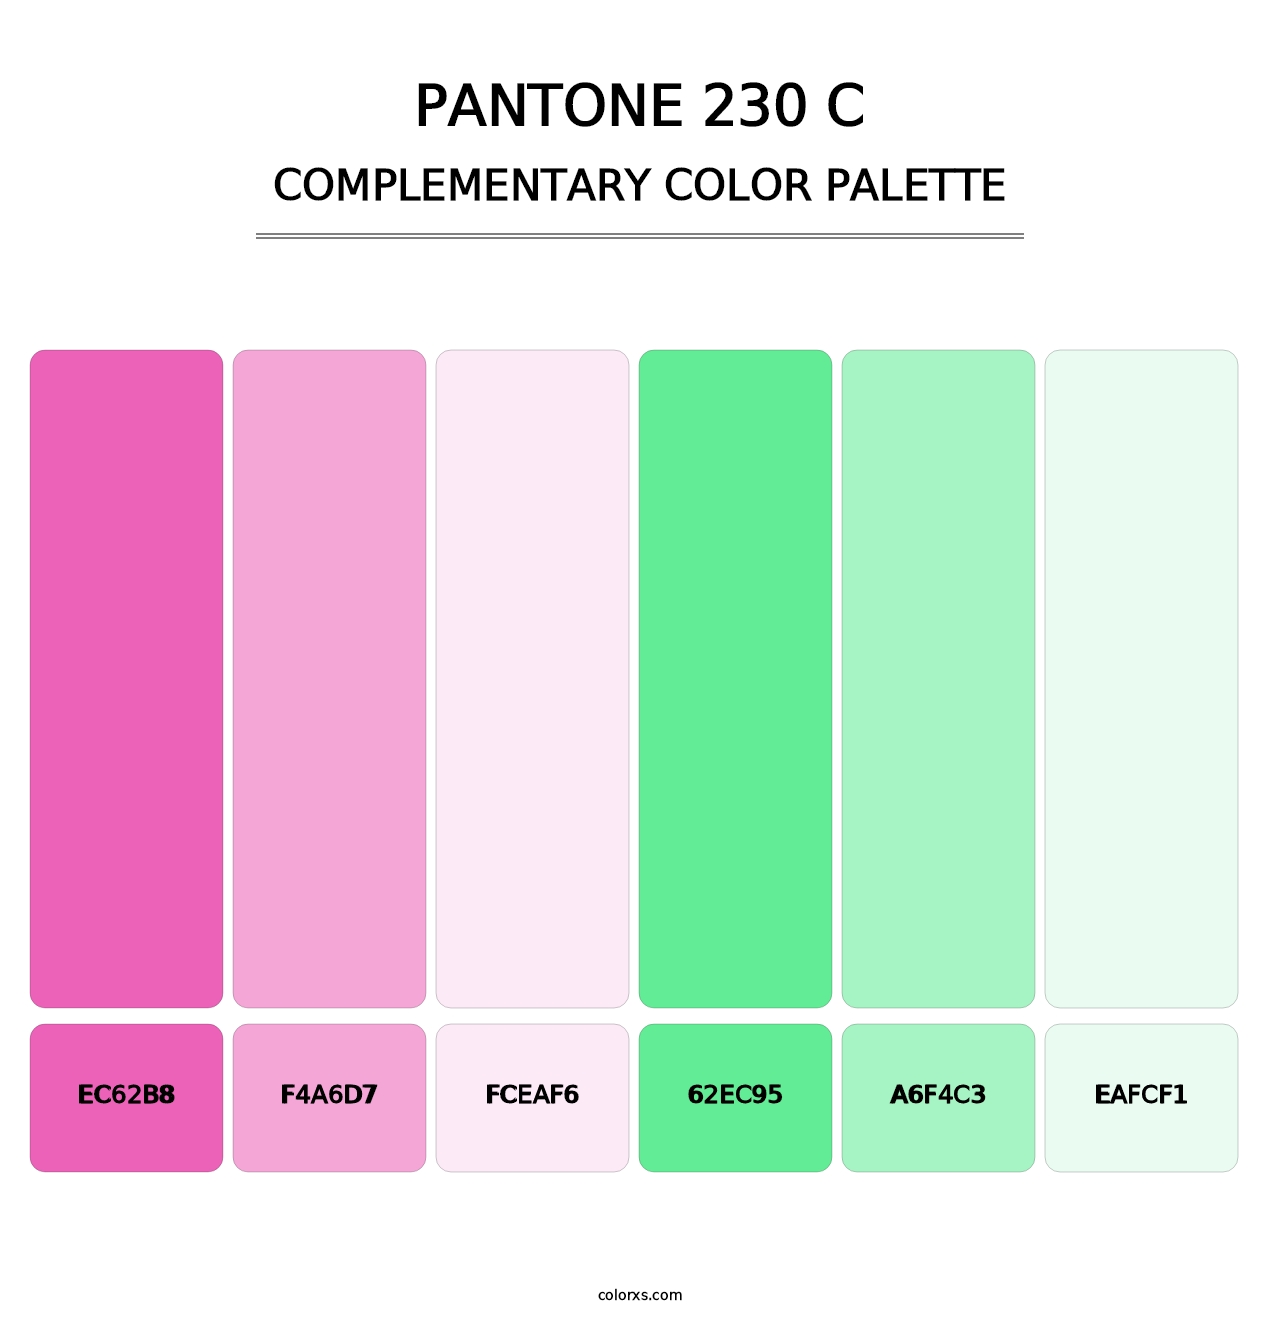 PANTONE 230 C - Complementary Color Palette